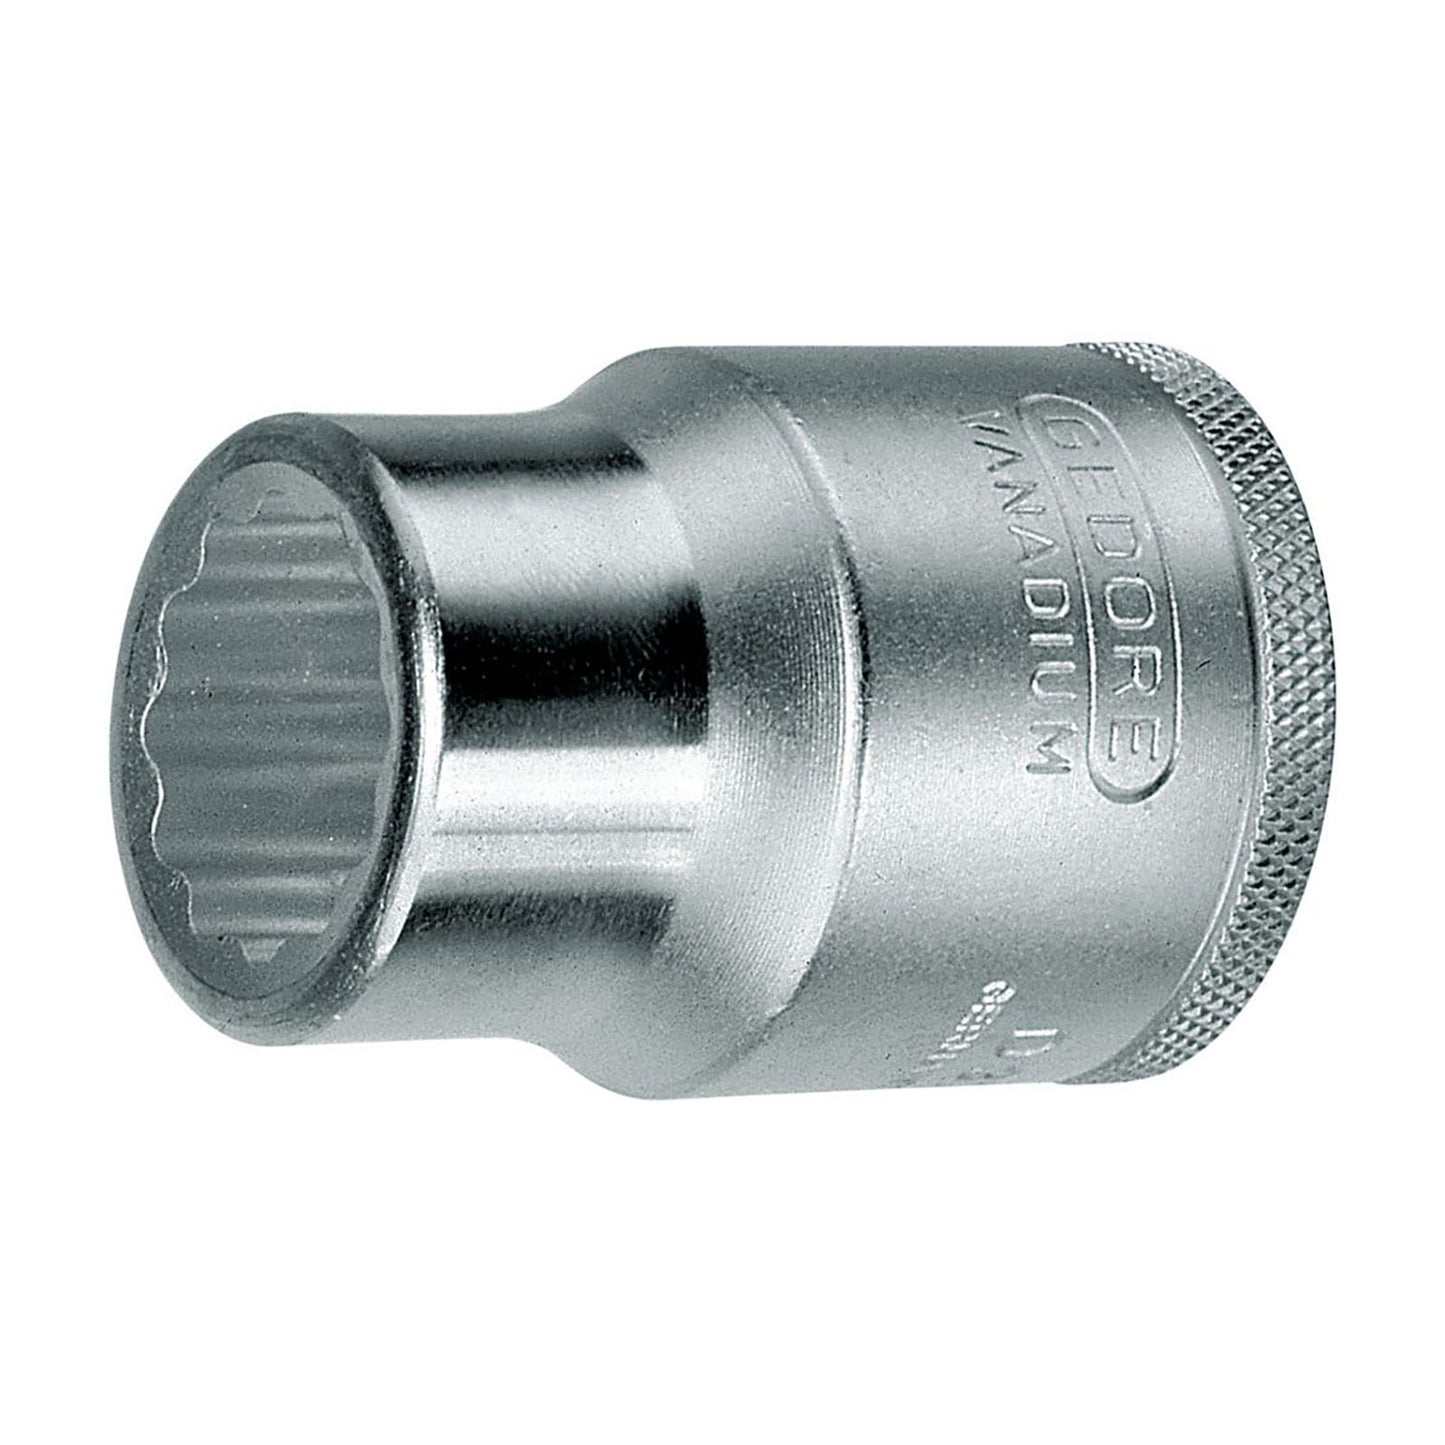 GEDORE D 32 60 - Unit Drive Socket 3/4", 60 mm (6273560)